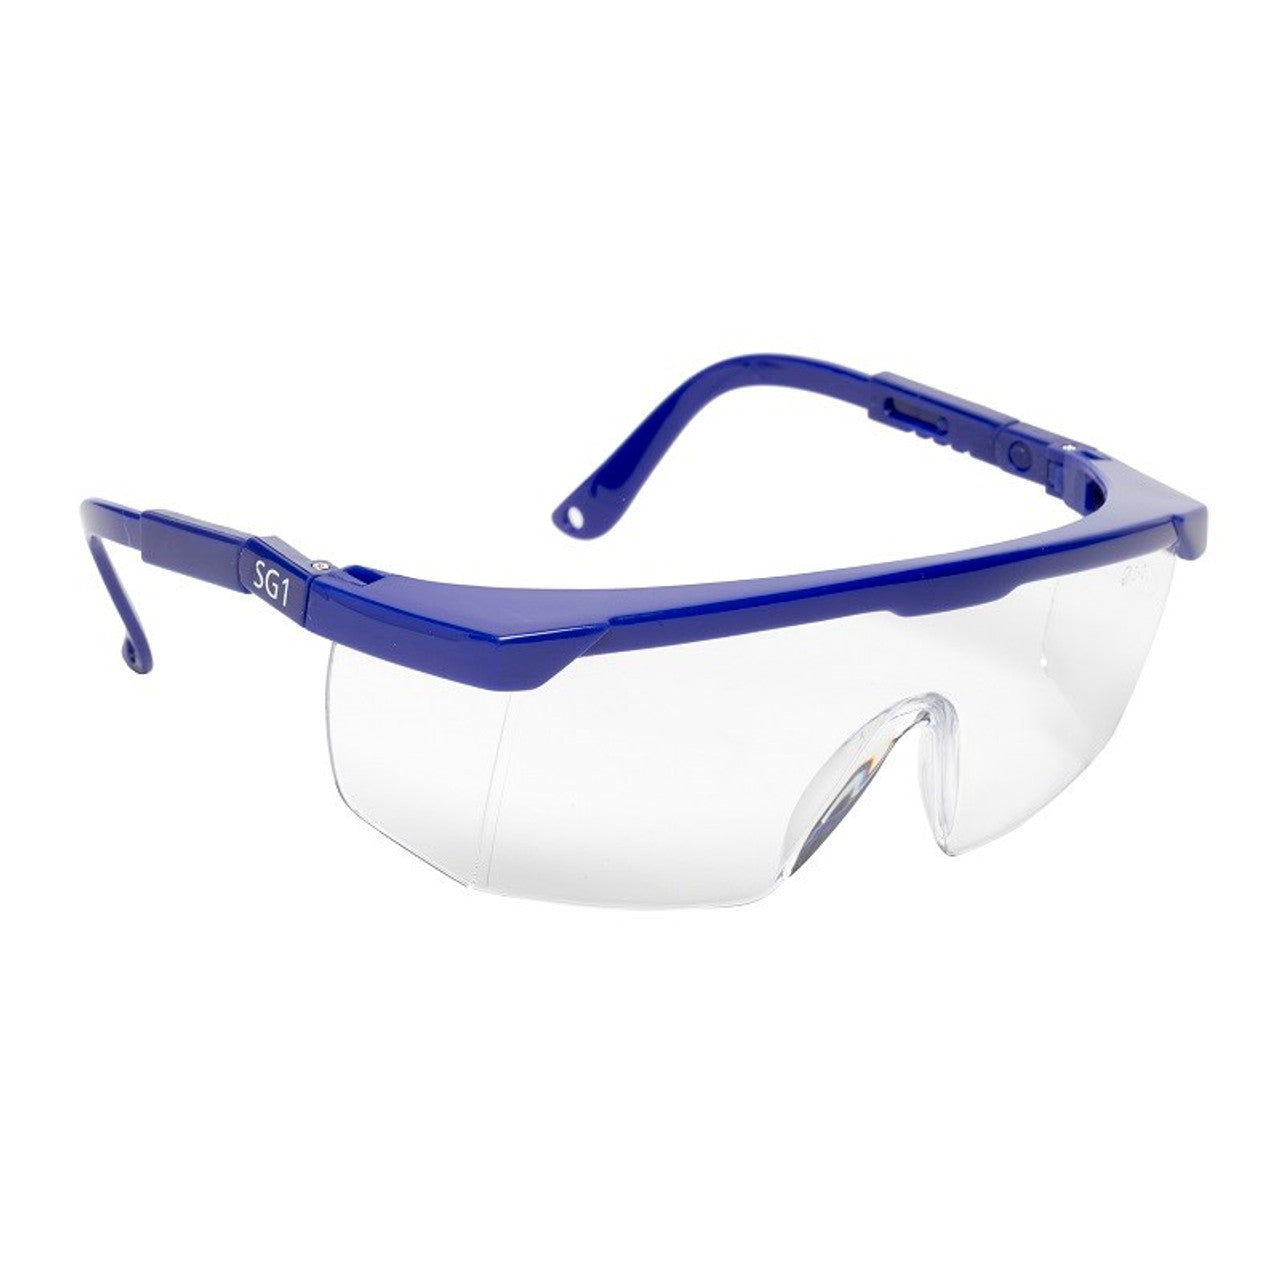 Safety Glasses SG1